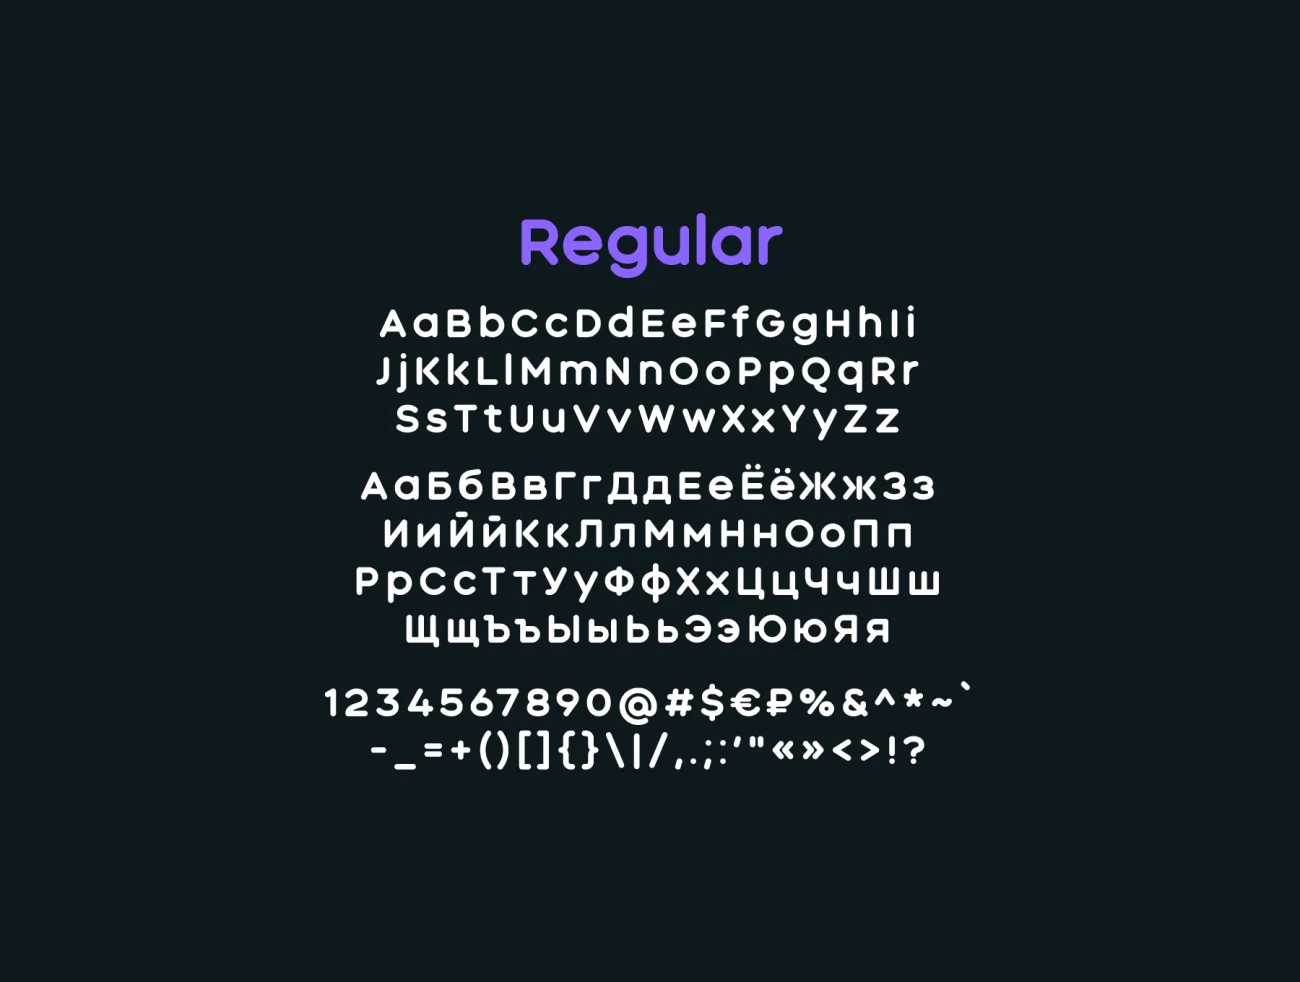 圆形英文字体系列 Aqum 2 - rounded font family-字体-到位啦UI